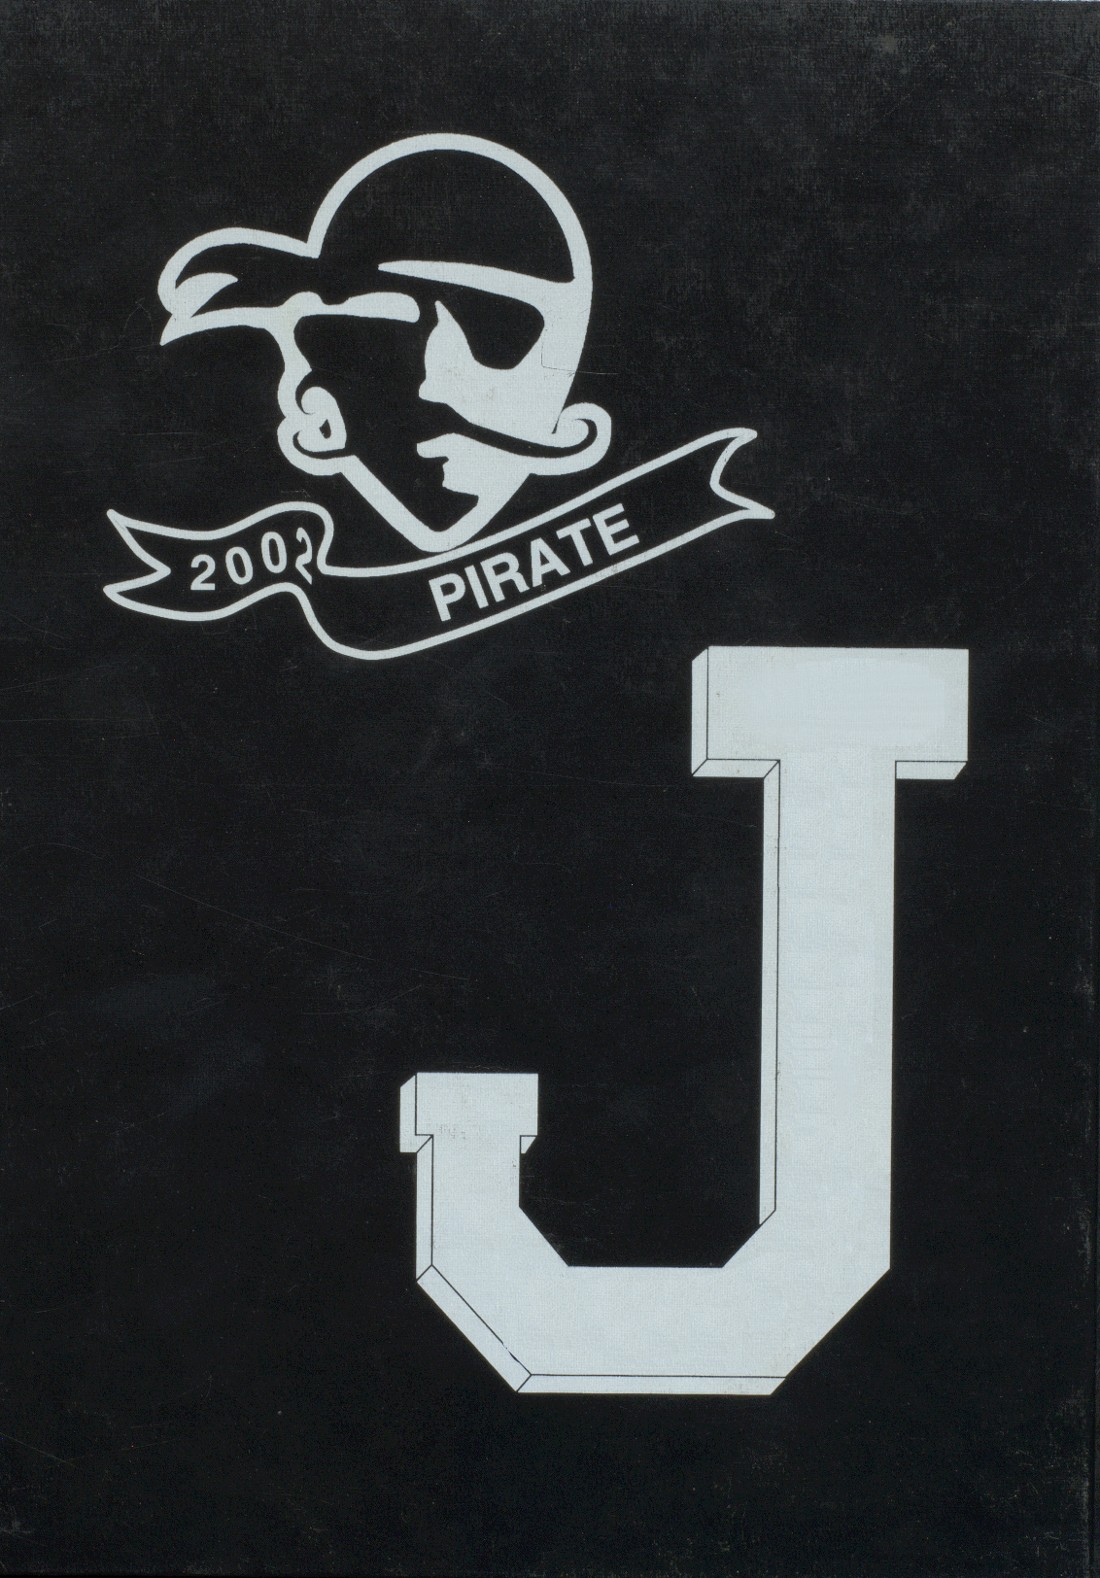 2002-yearbook-from-jasper-high-school-from-jasper-arkansas-for-sale